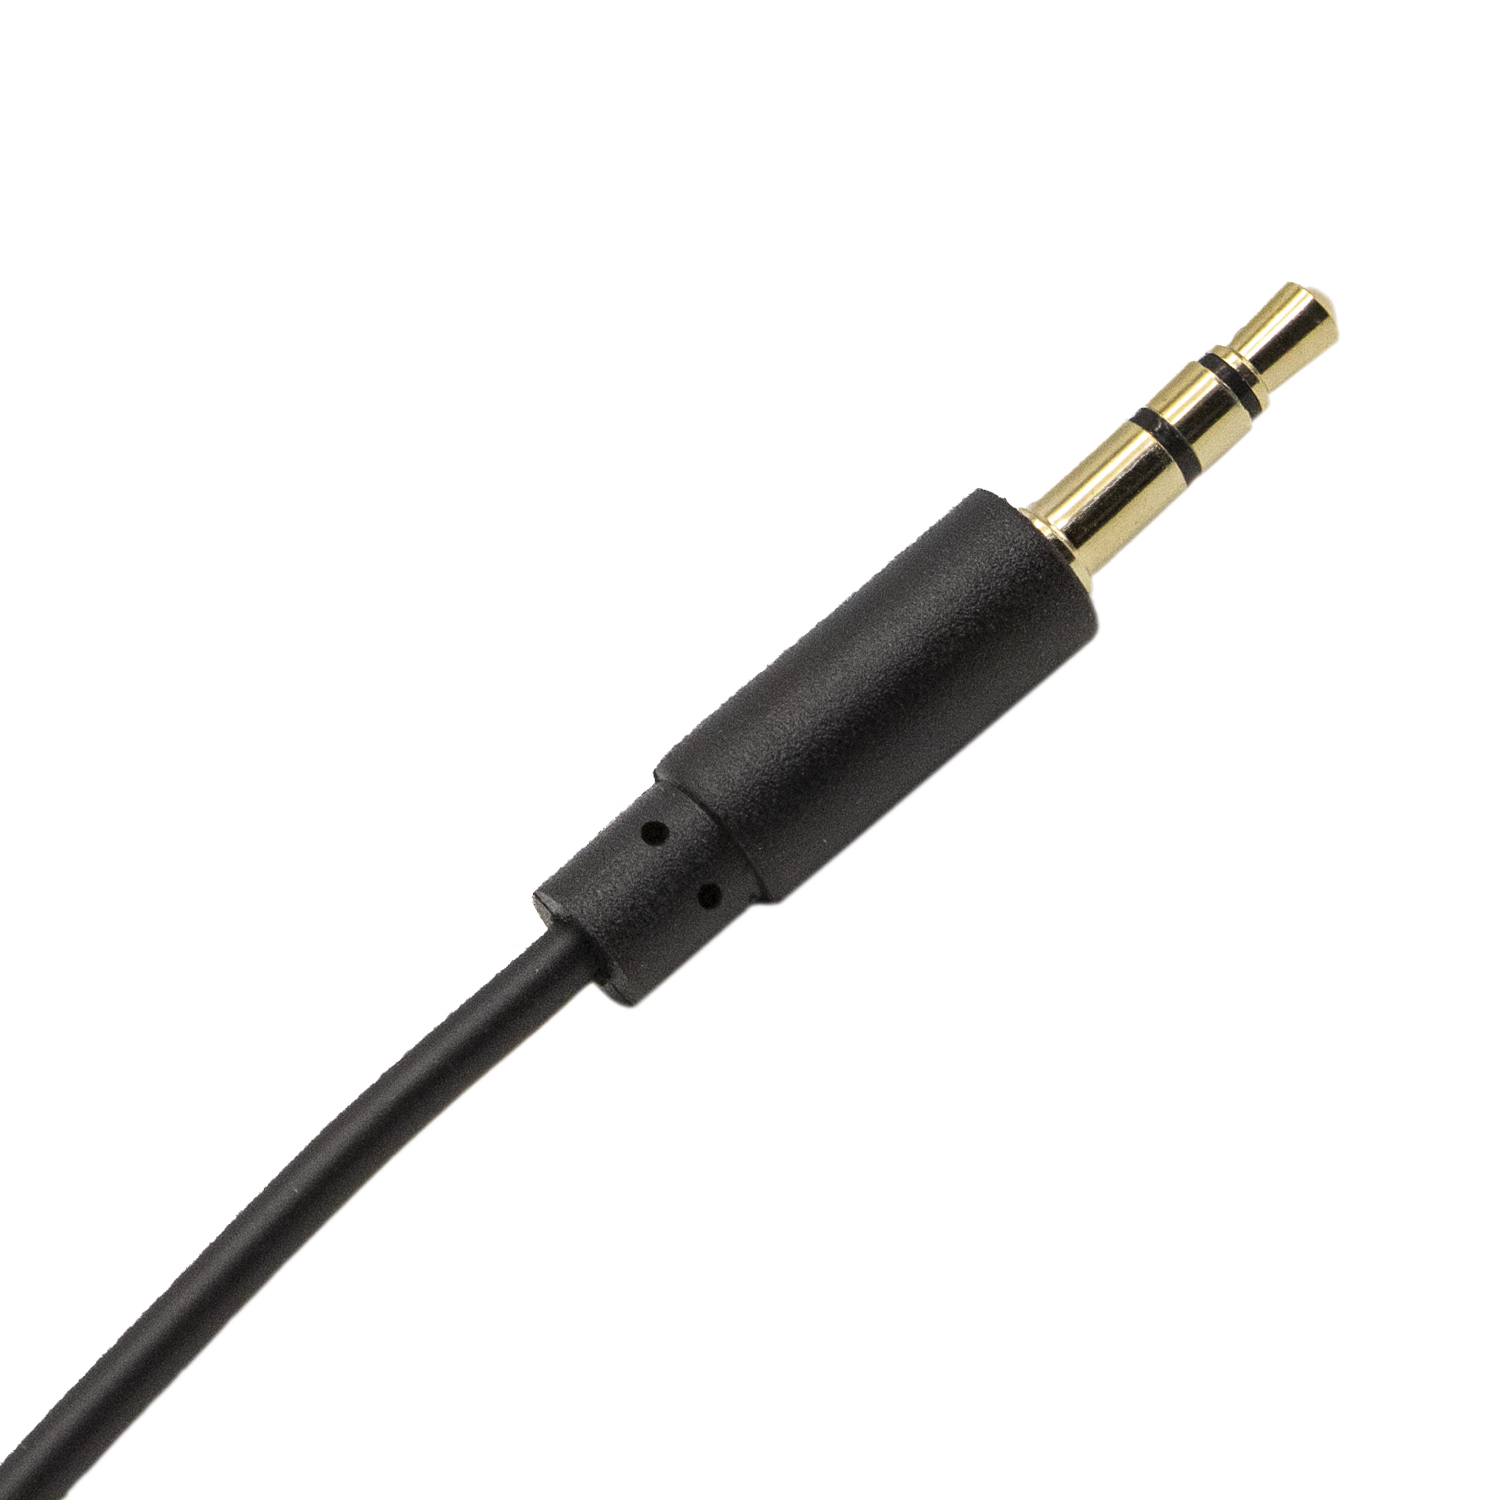 Cable de audio estereo jack 3.5 macho acodado dorado 1.5 M Negro